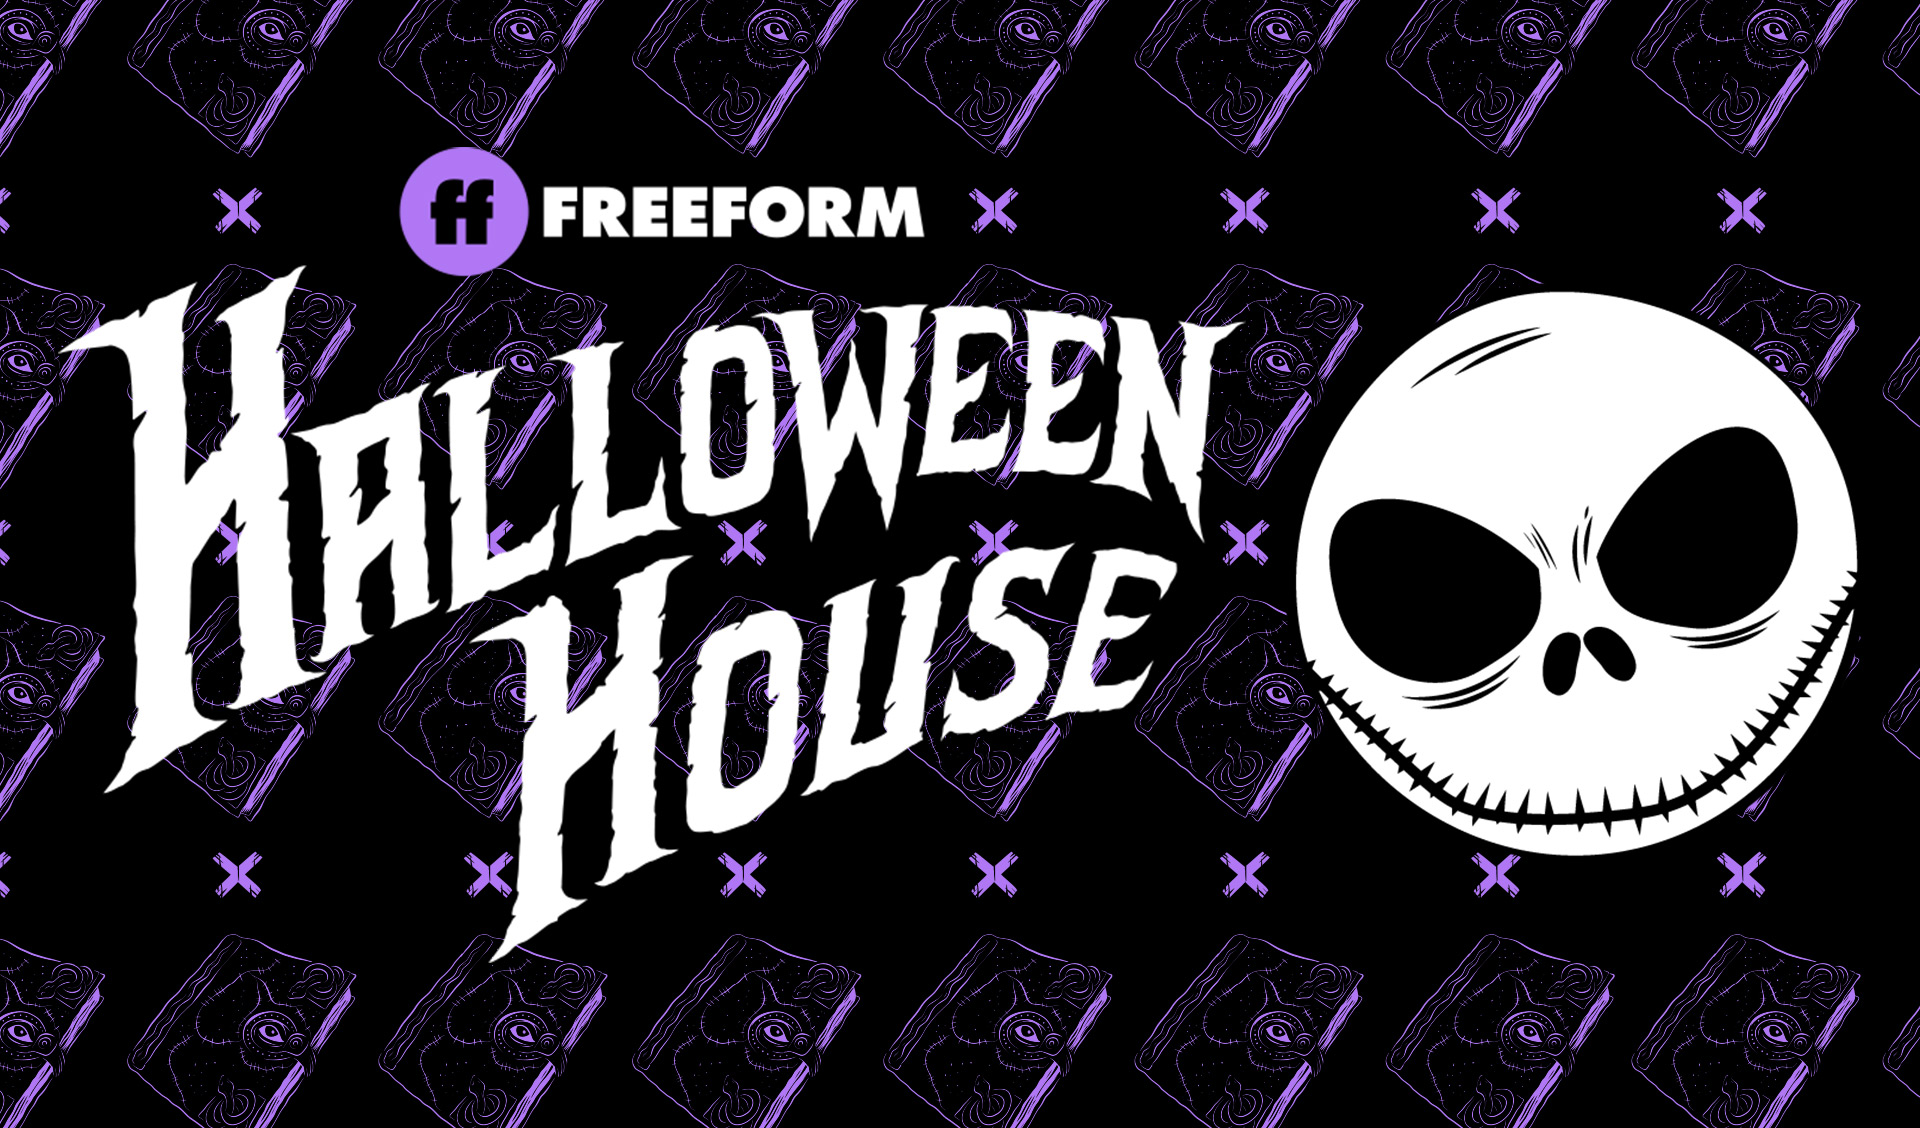 Freeform’s Halloween House Returns!